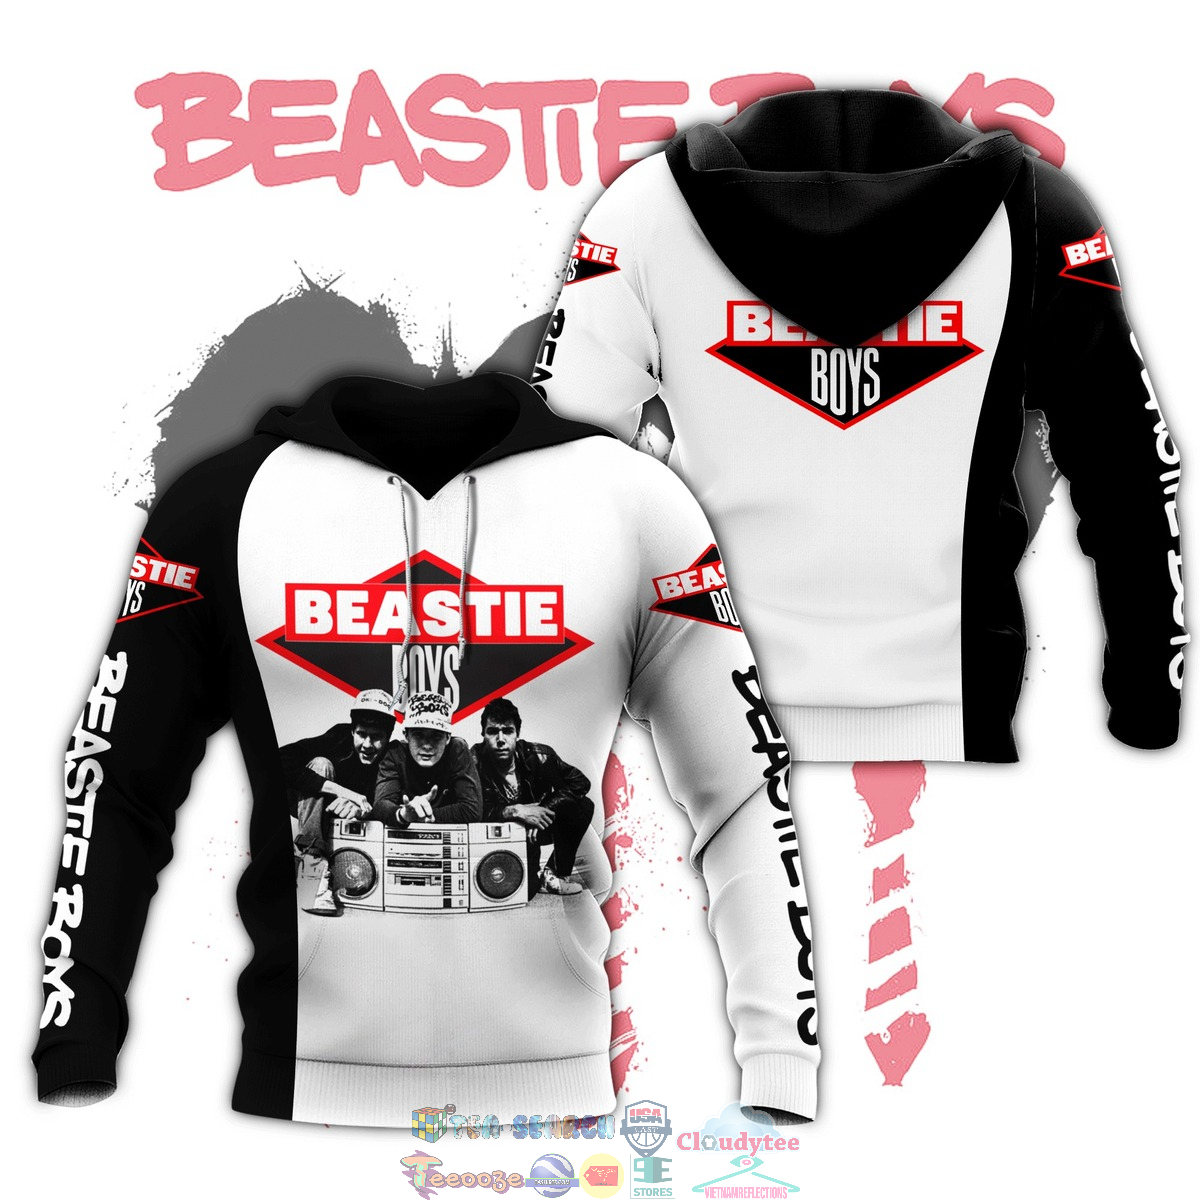 Beastie Boys Band ver 1 3D hoodie and t-shirt – Saleoff